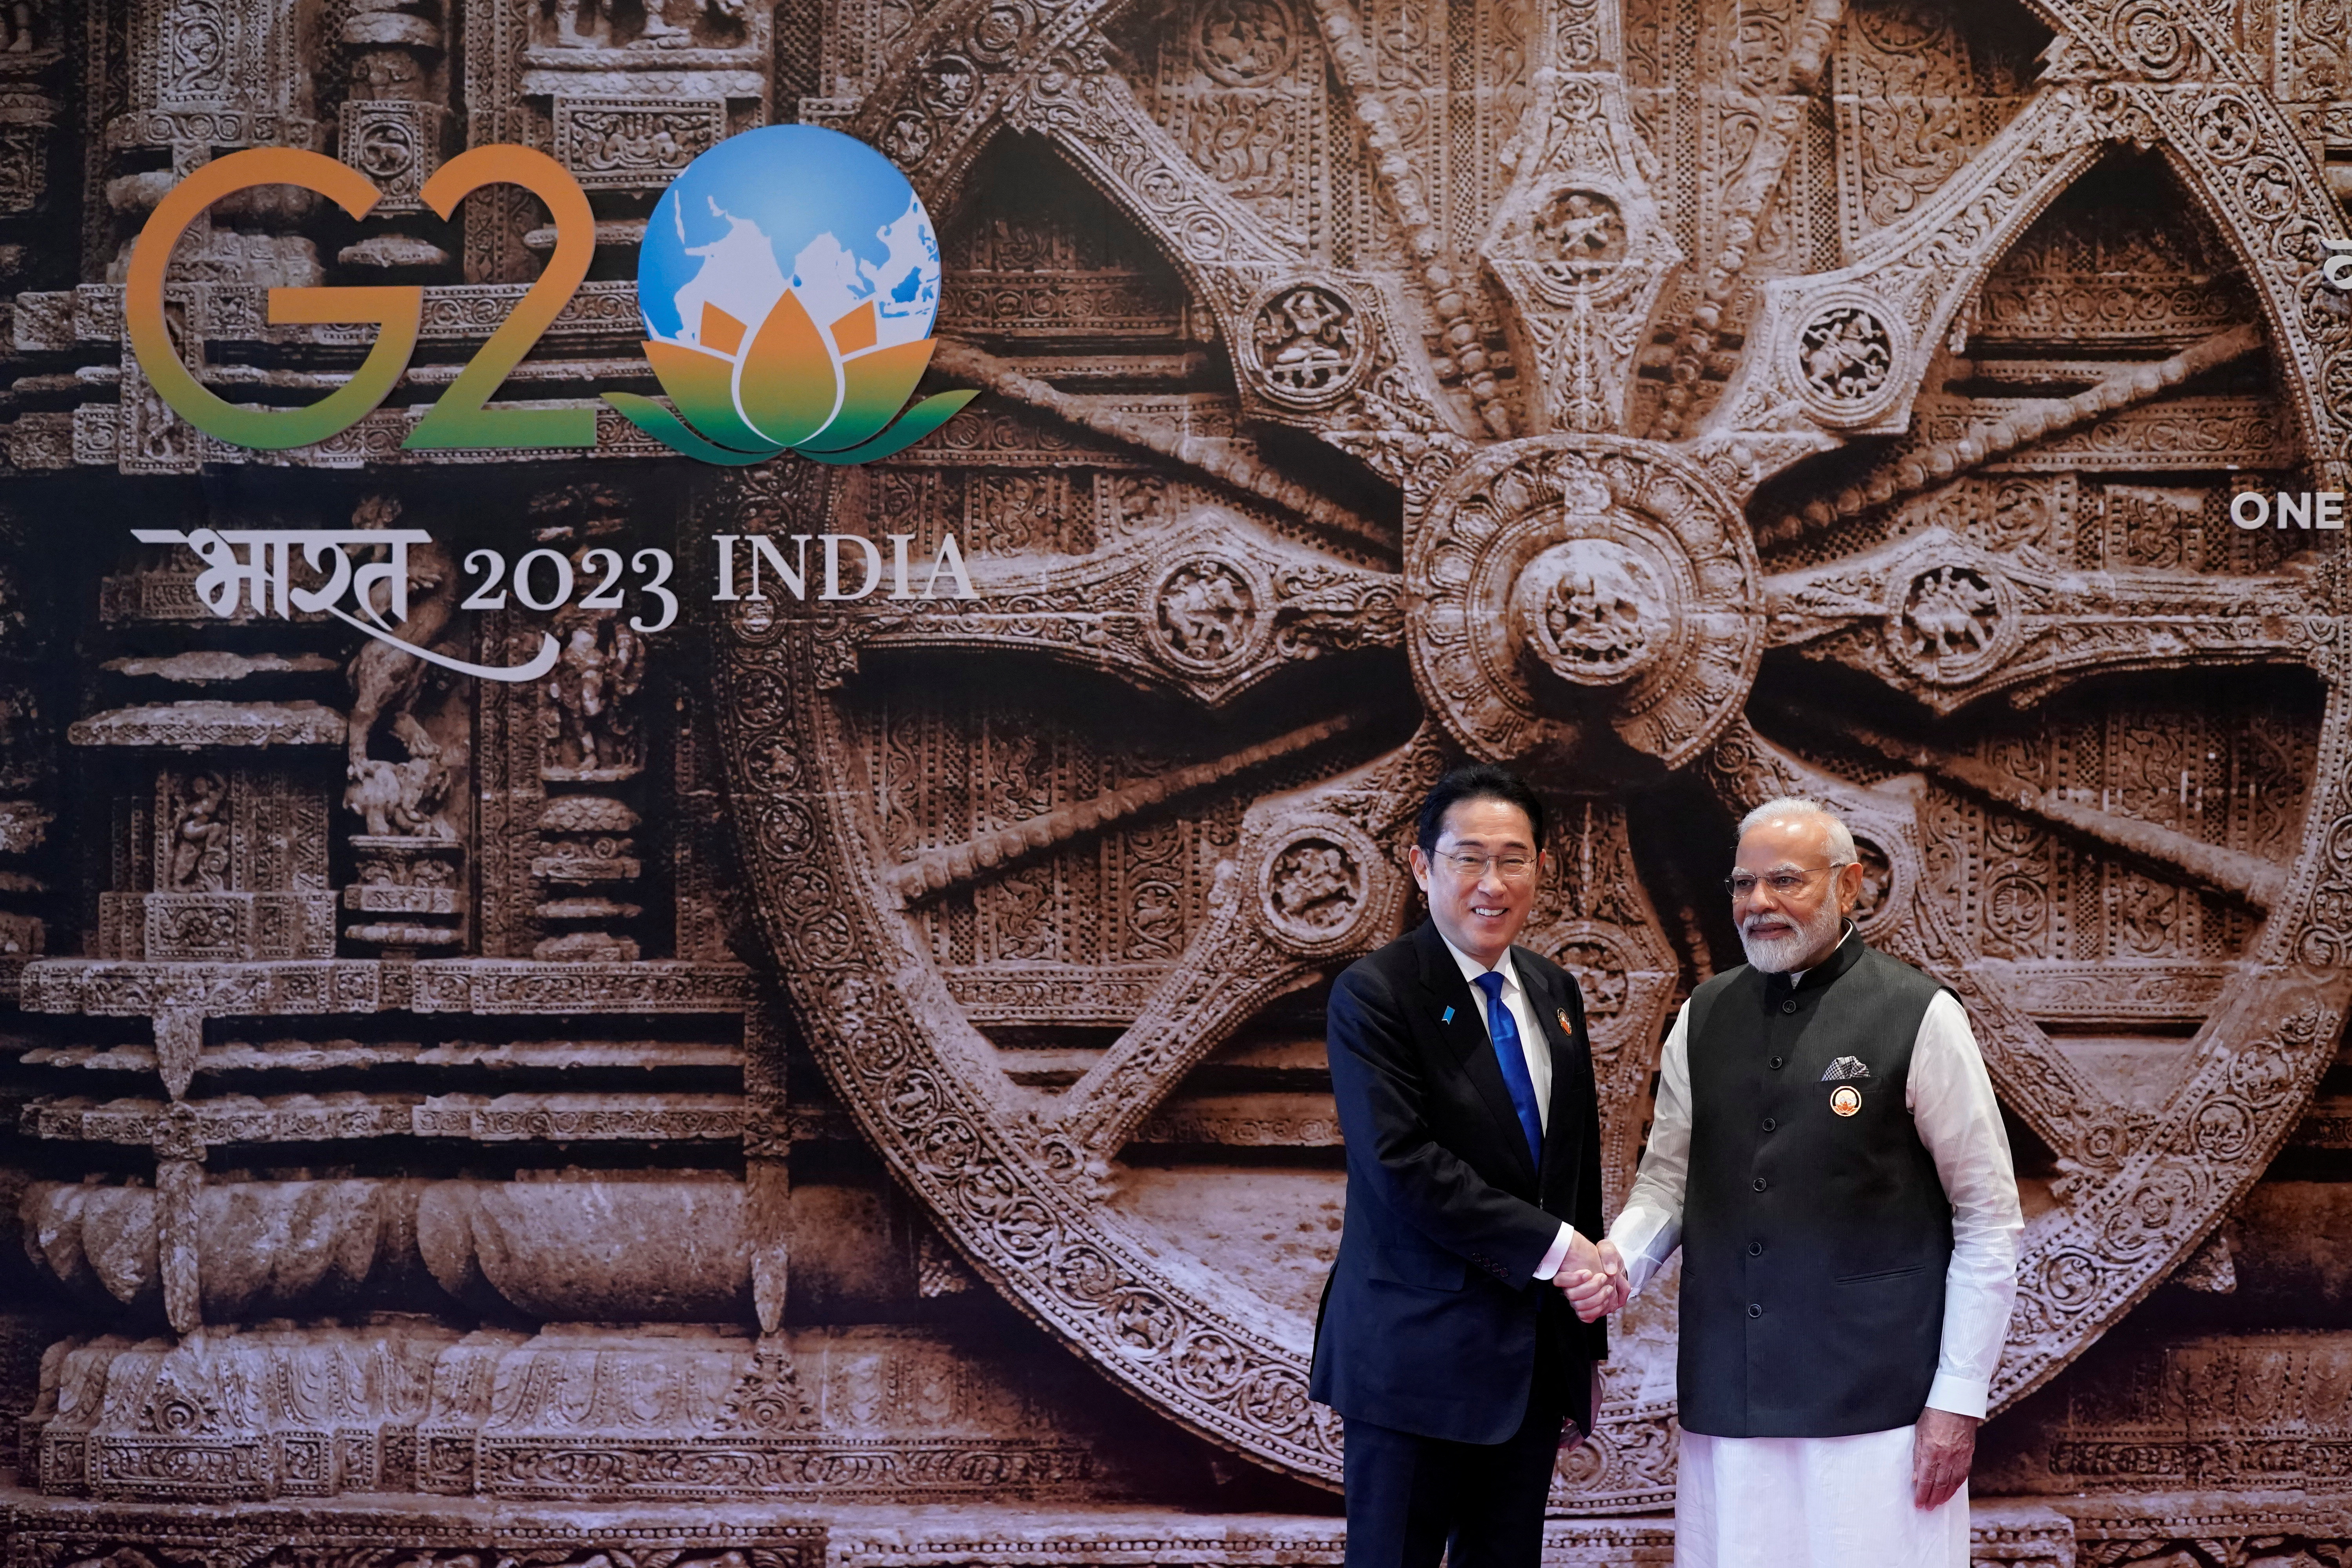 G20 summit in India